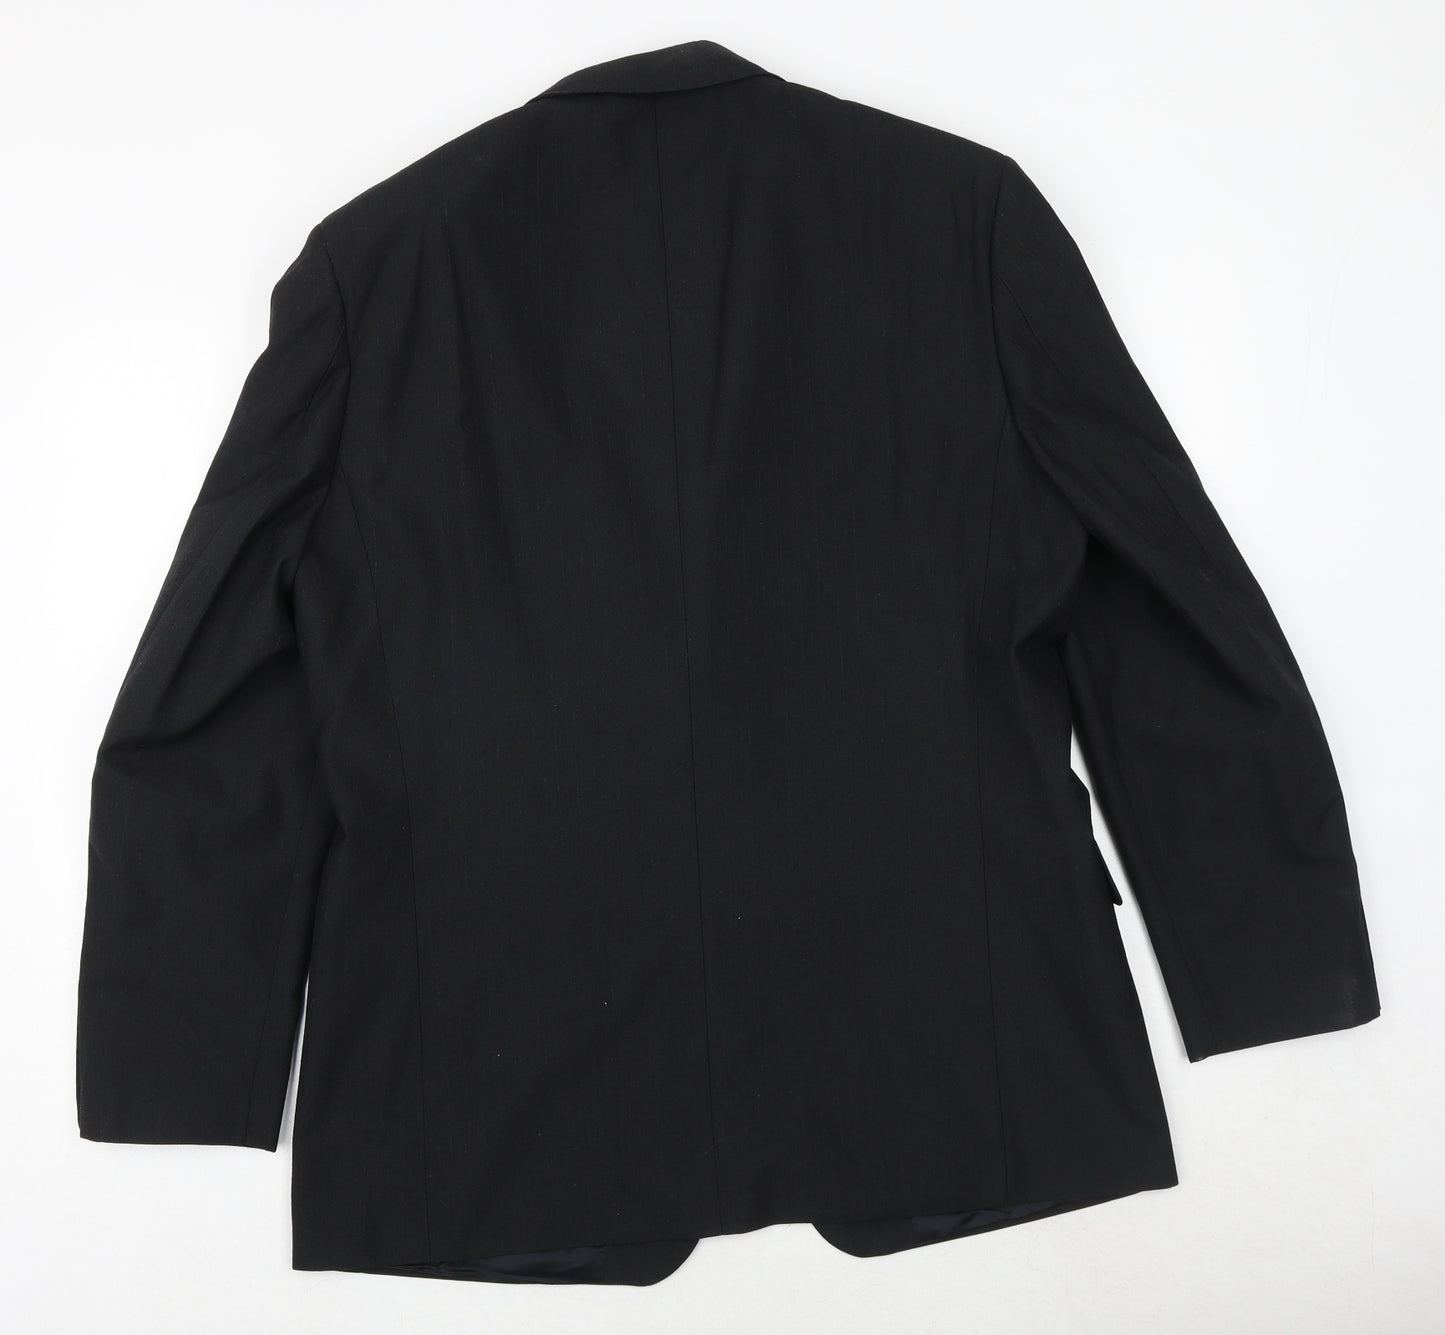 Douglas Mens Black Polyester Jacket Suit Jacket Size 42 Regular